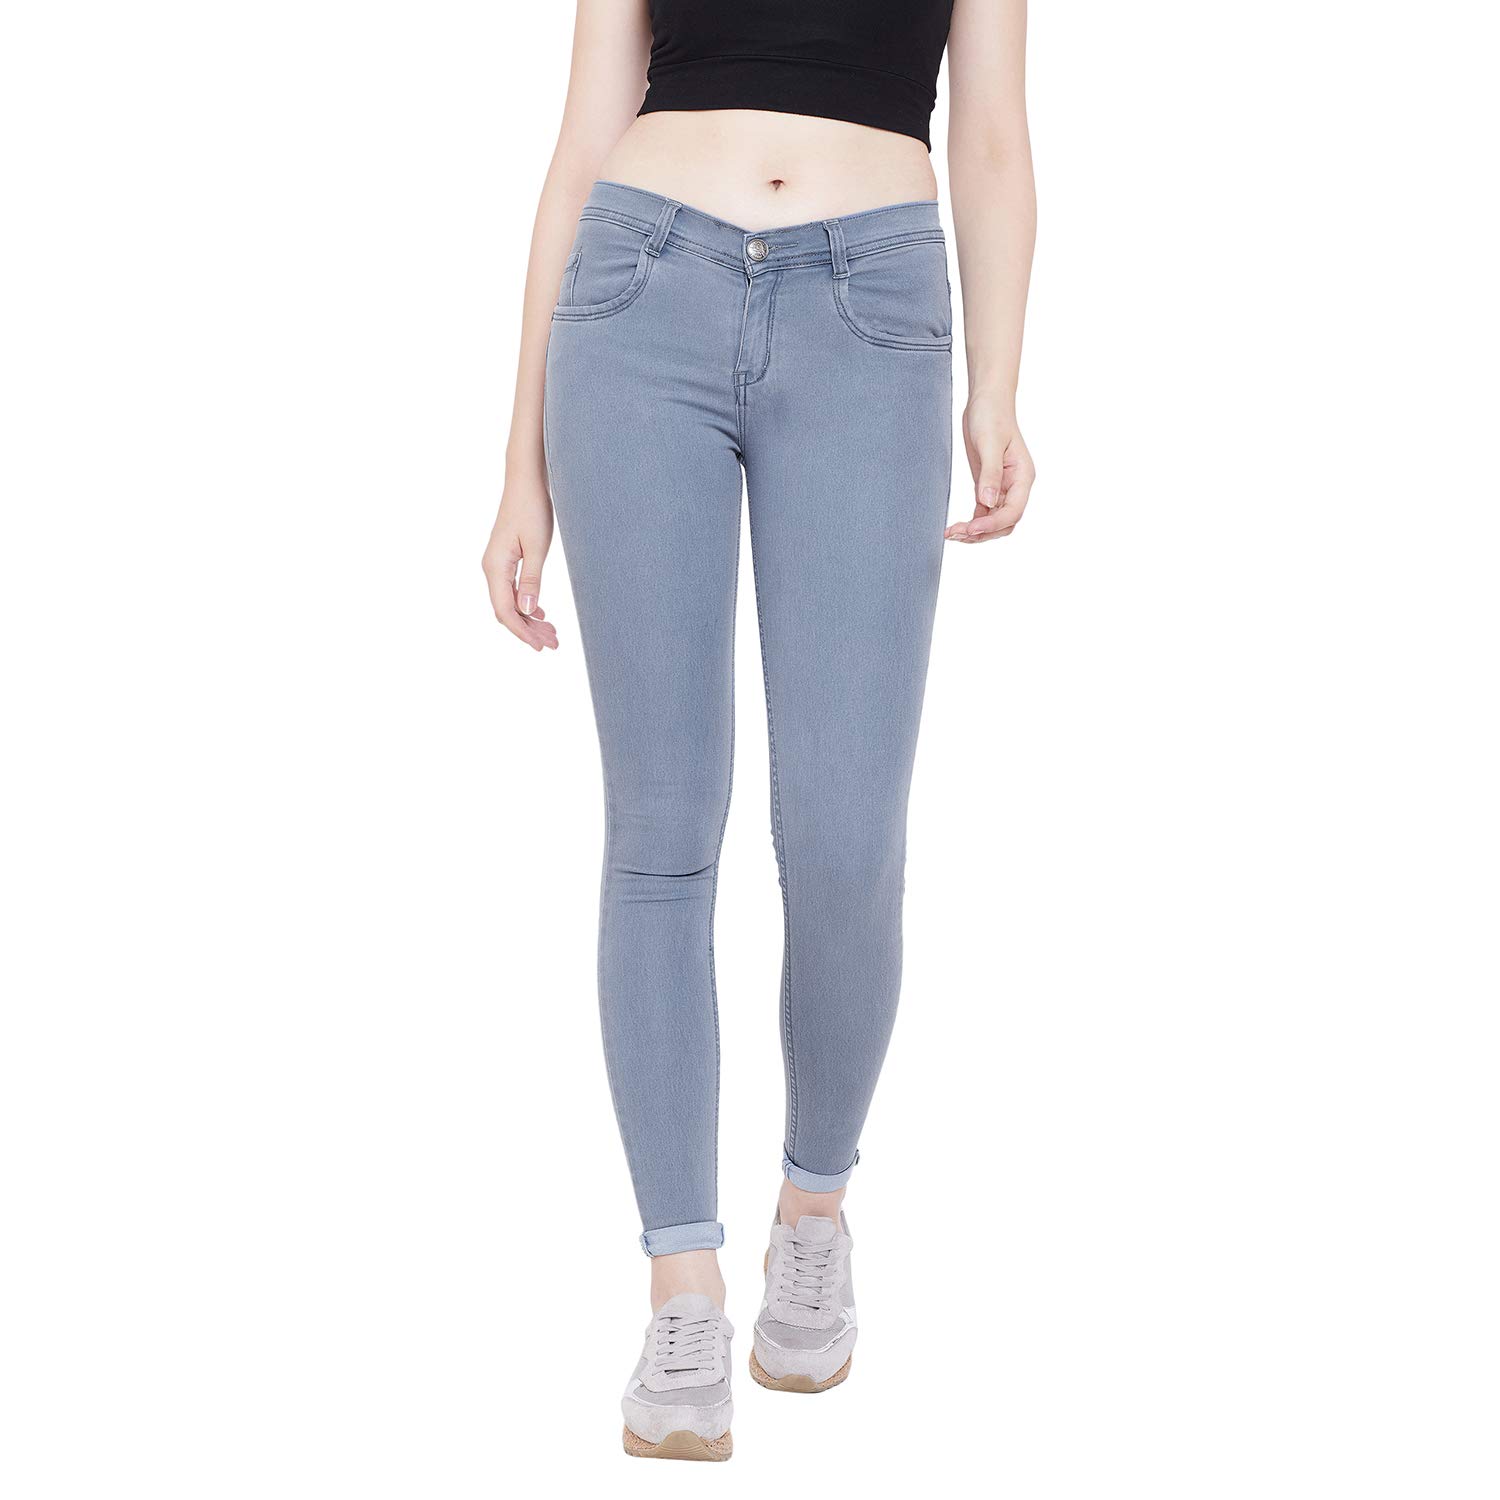 NIFTY Women's Slim Fit Cotton Jeans